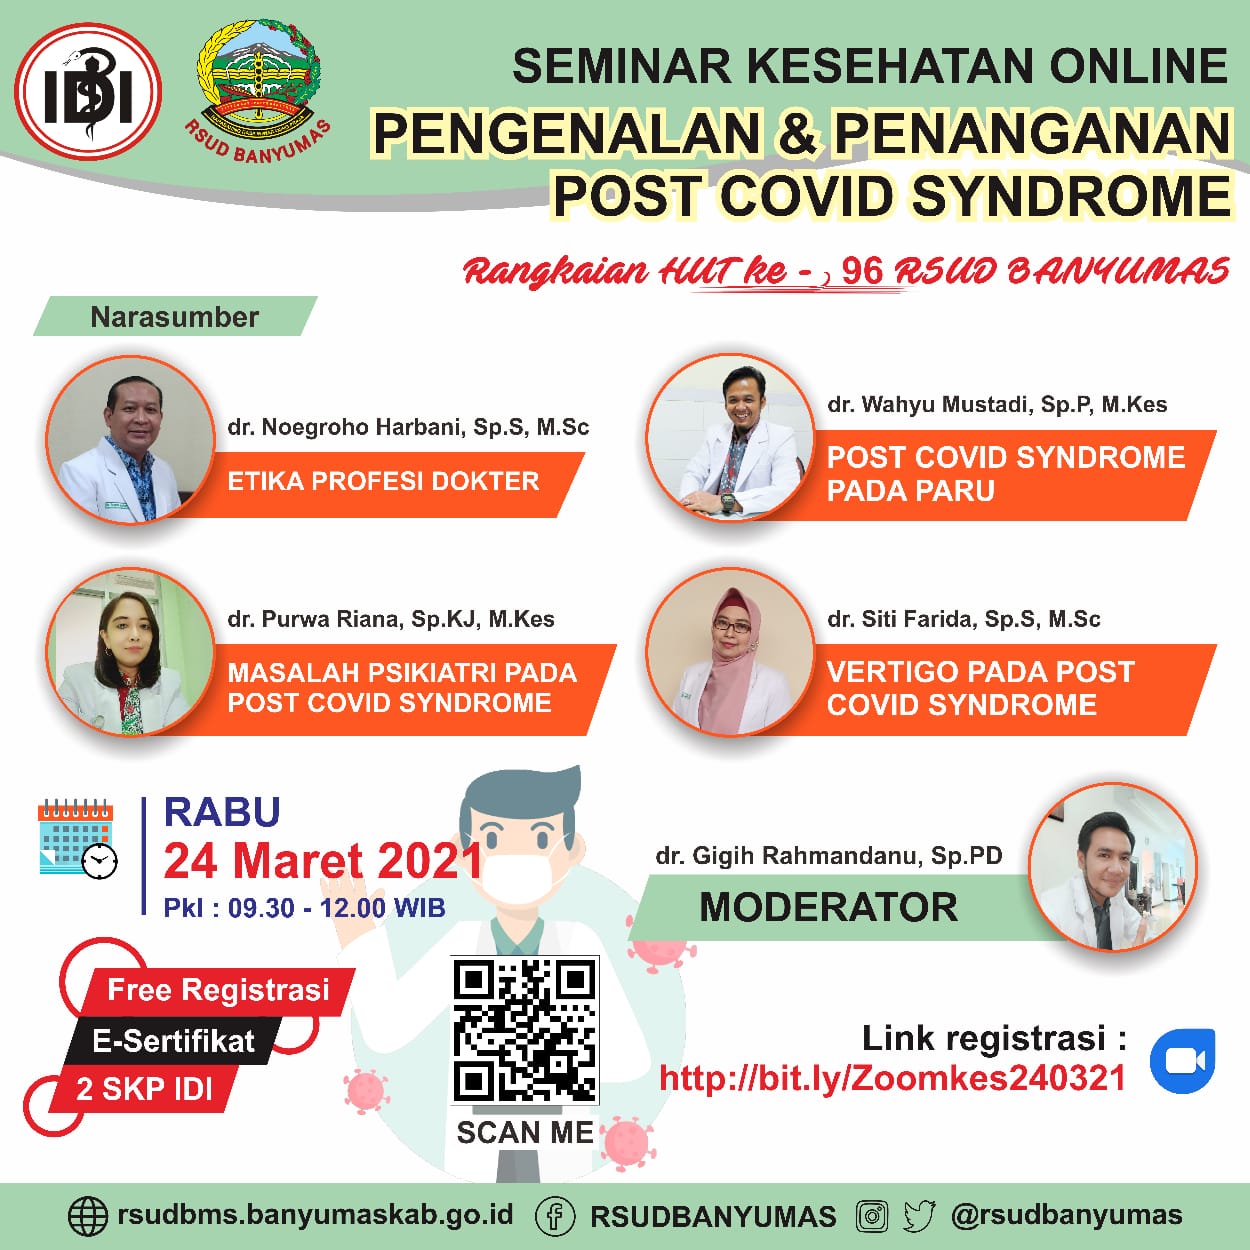 Pengenalan dan Pengangan Post Covid Syndrome - Seminar Online